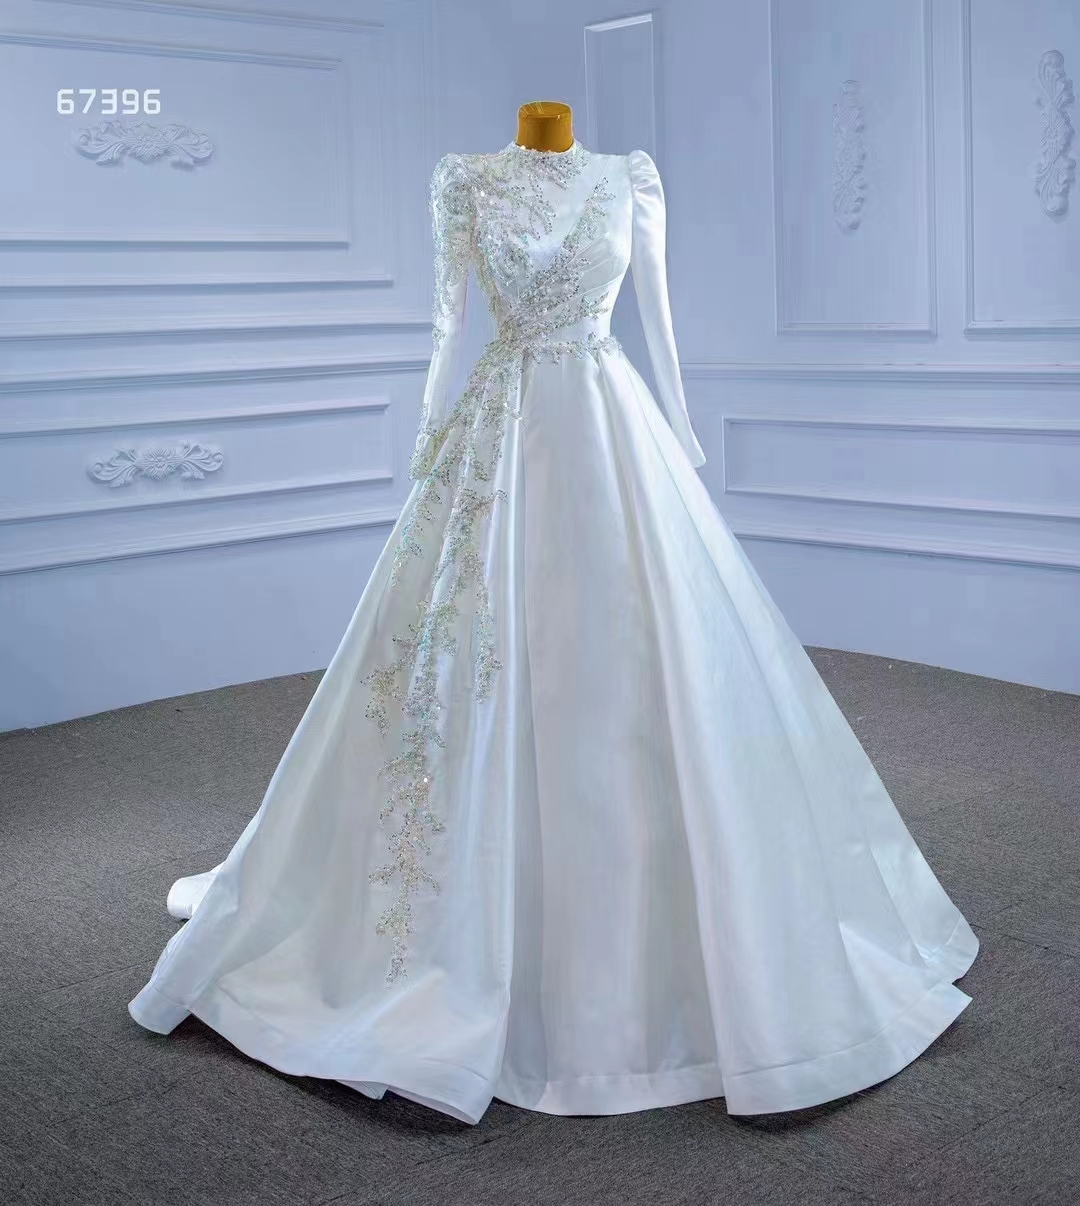 Luxury White Long Sleeve High Neck Lace Pearls paljetter bröllopsklänning SM67396